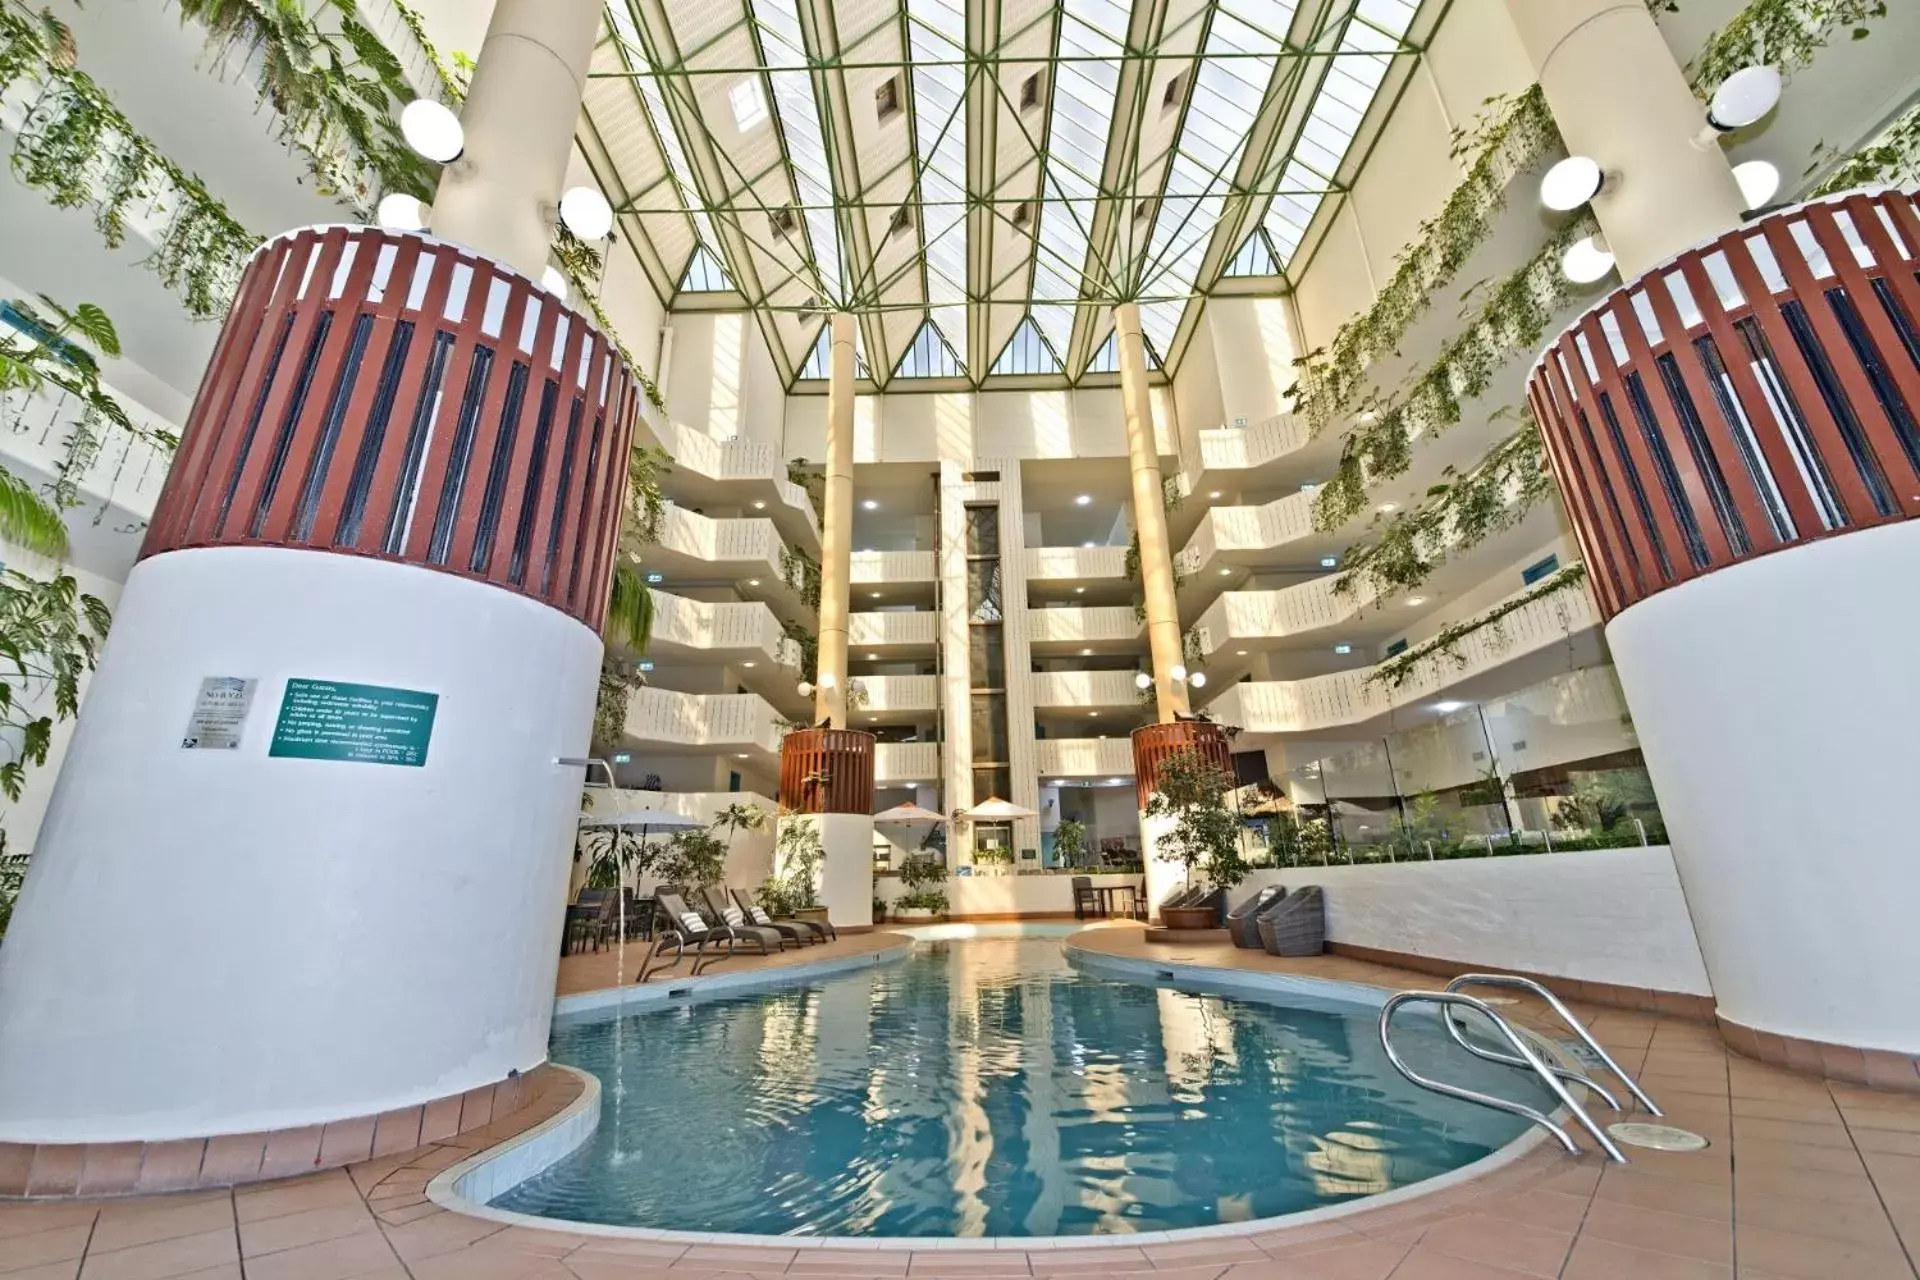 Swimming pool in Atrium Hotel Mandurah